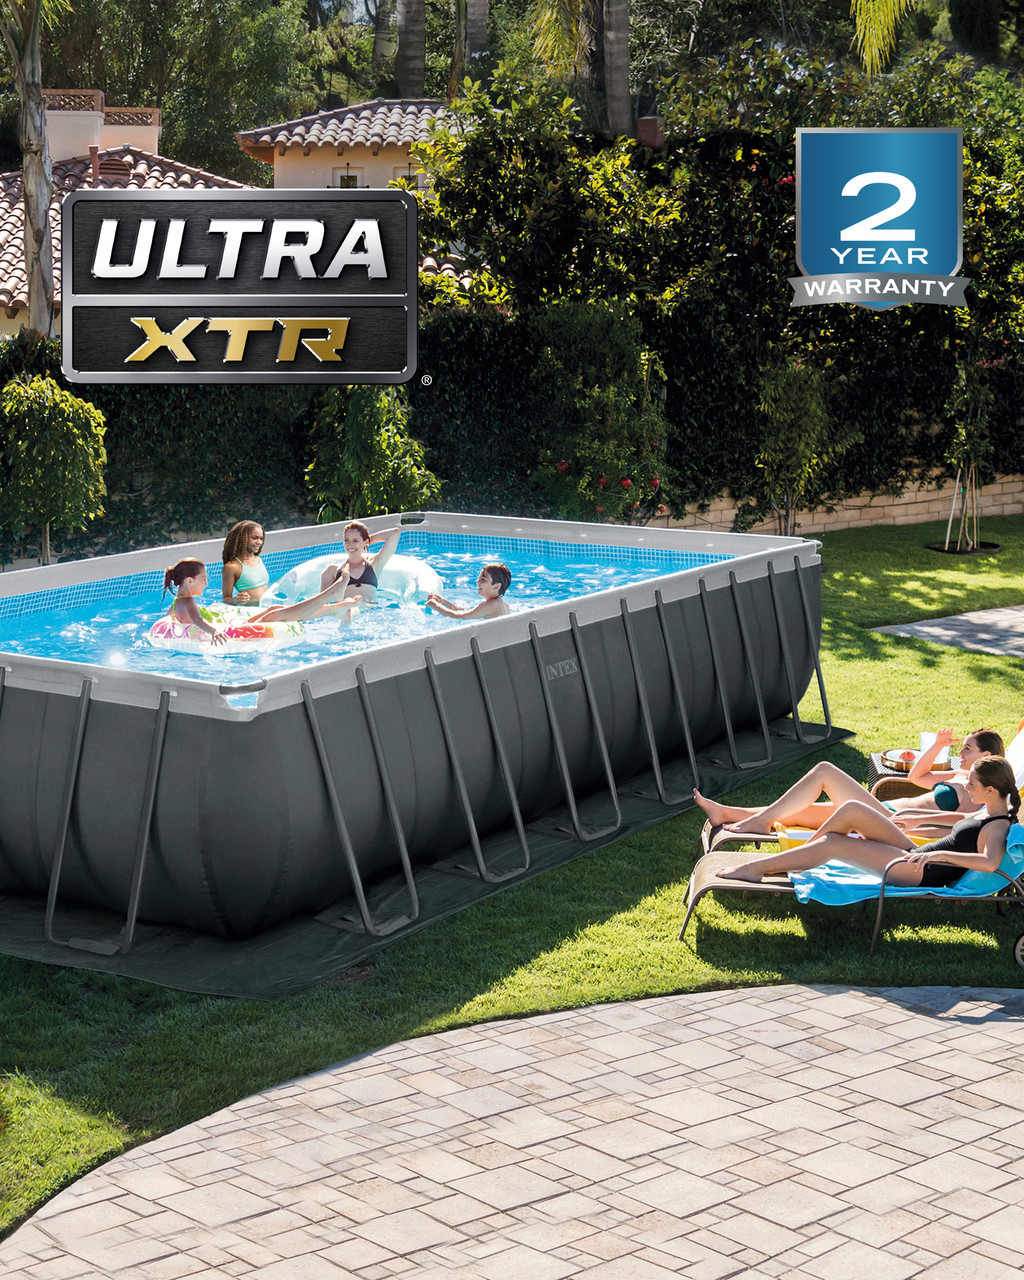 INTEX Rectangular Ultra XTR® Frame Above Ground Pool w/ Sand Filter Pump -  24' x 12' x 52